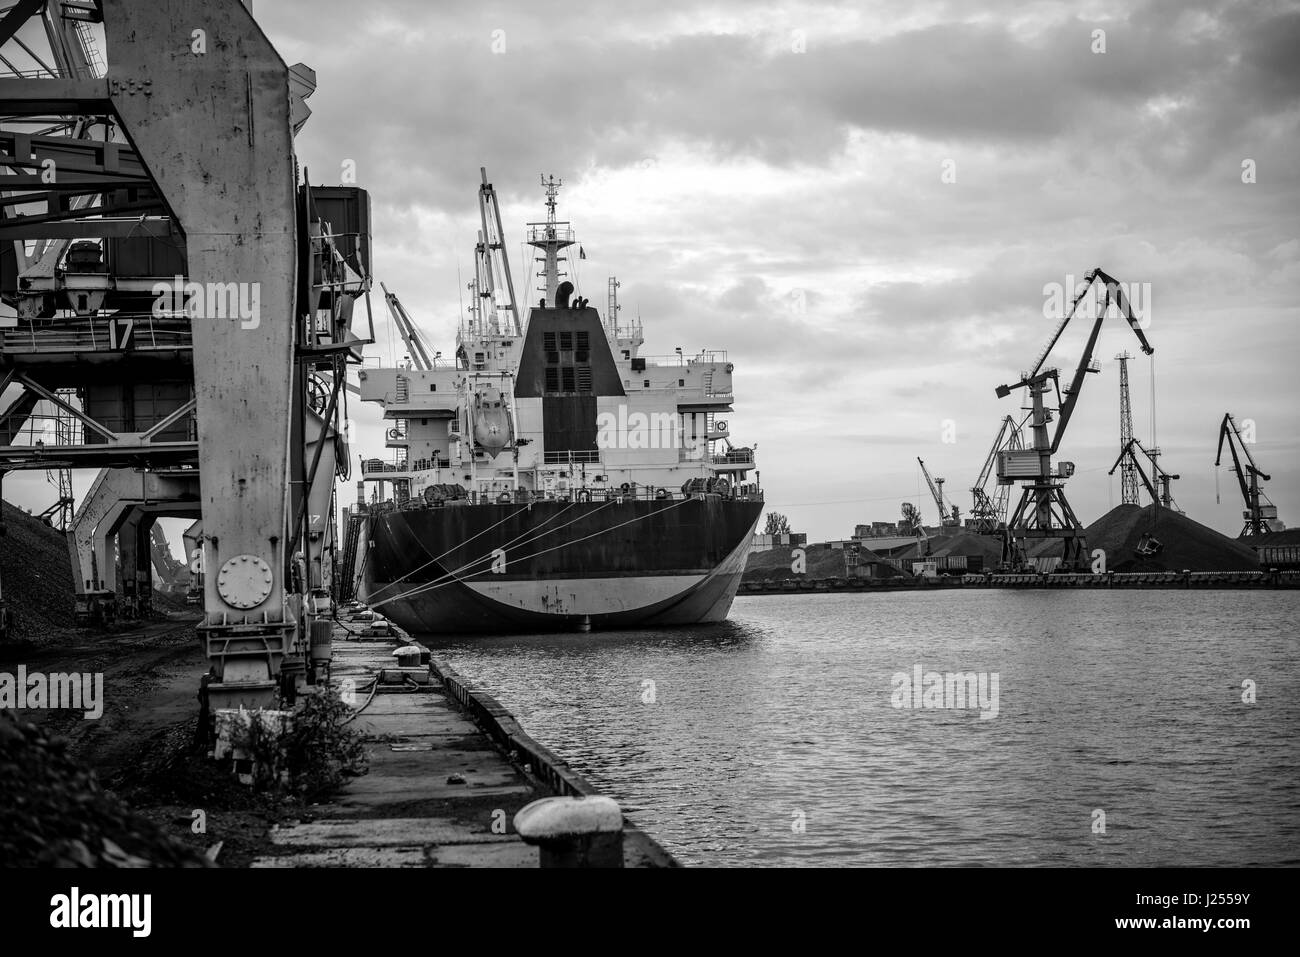 Ships and cranes at a port terminal. Stock Photo